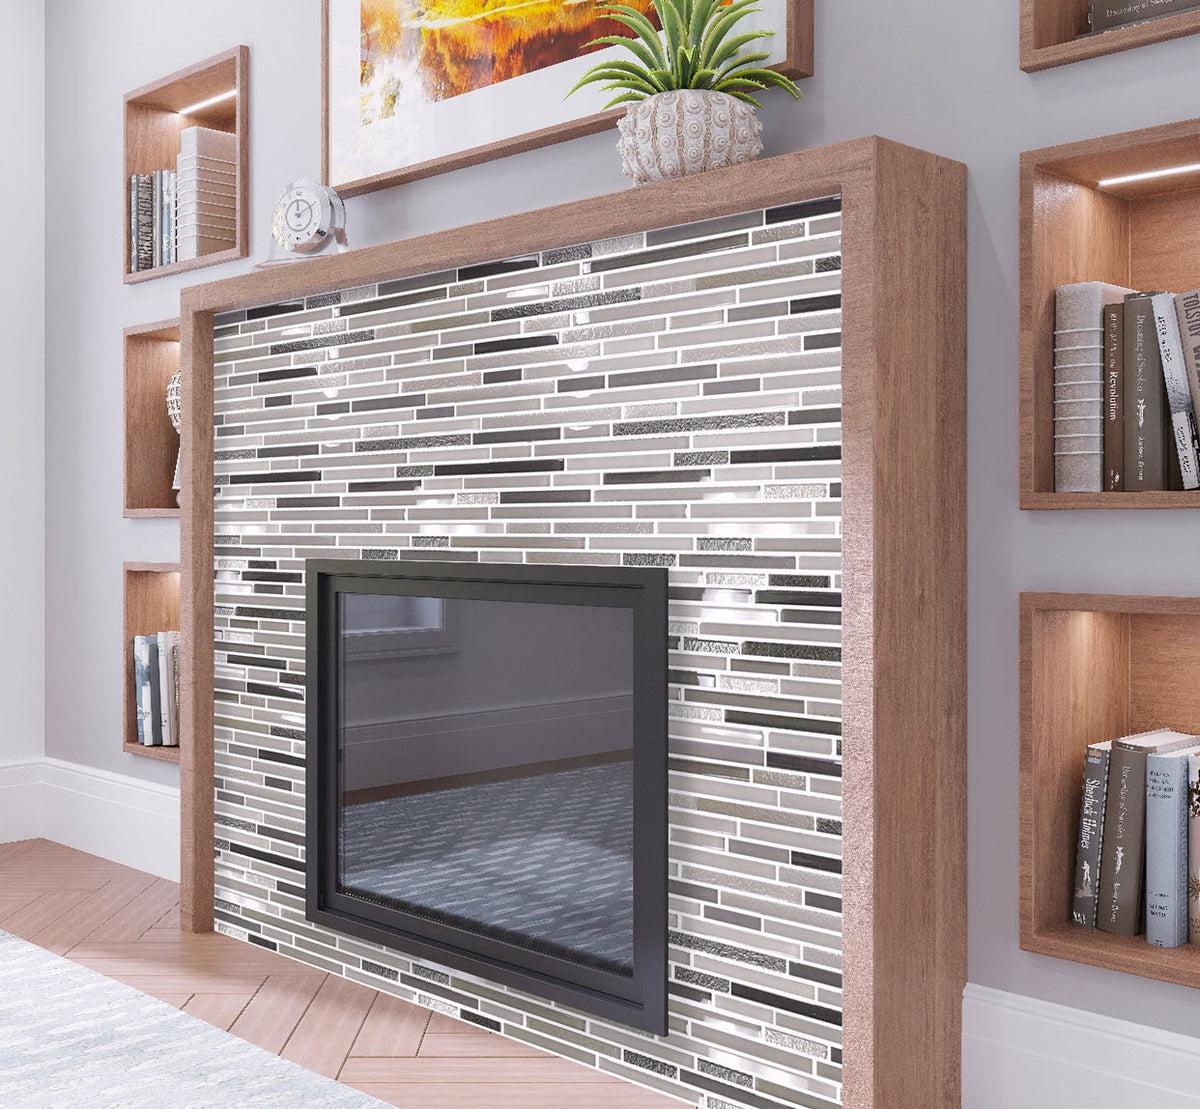 Waterfall Gray Linear Glass Mosaic Tile Modern Fireplace Surround Design